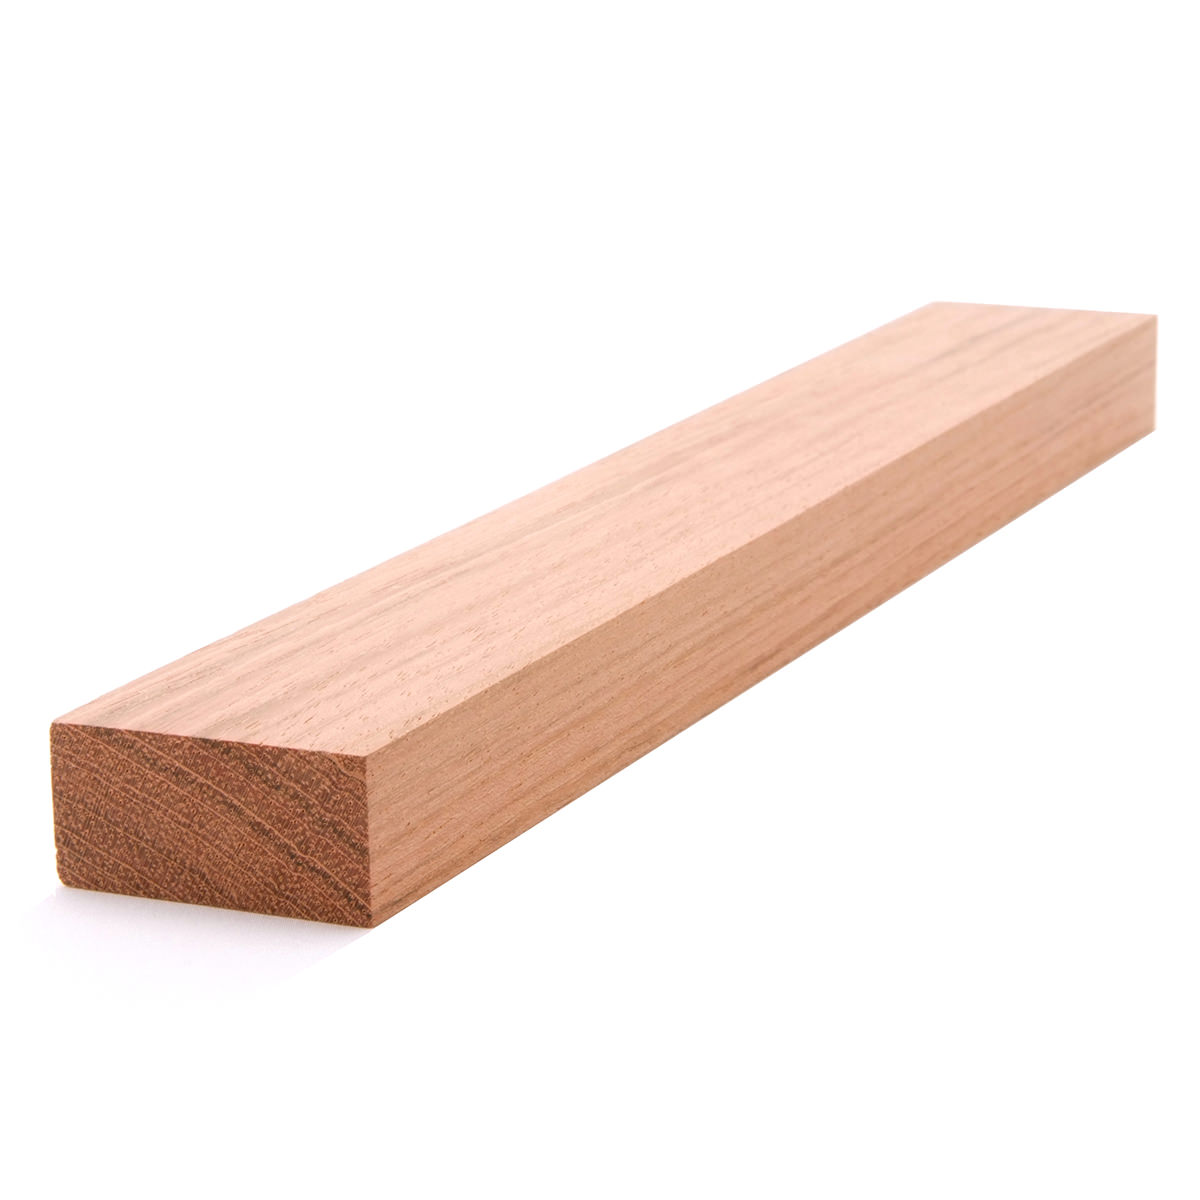 1x2 (3/4" x 11/2") Brazilian Cherry S4S Lumber, Boards